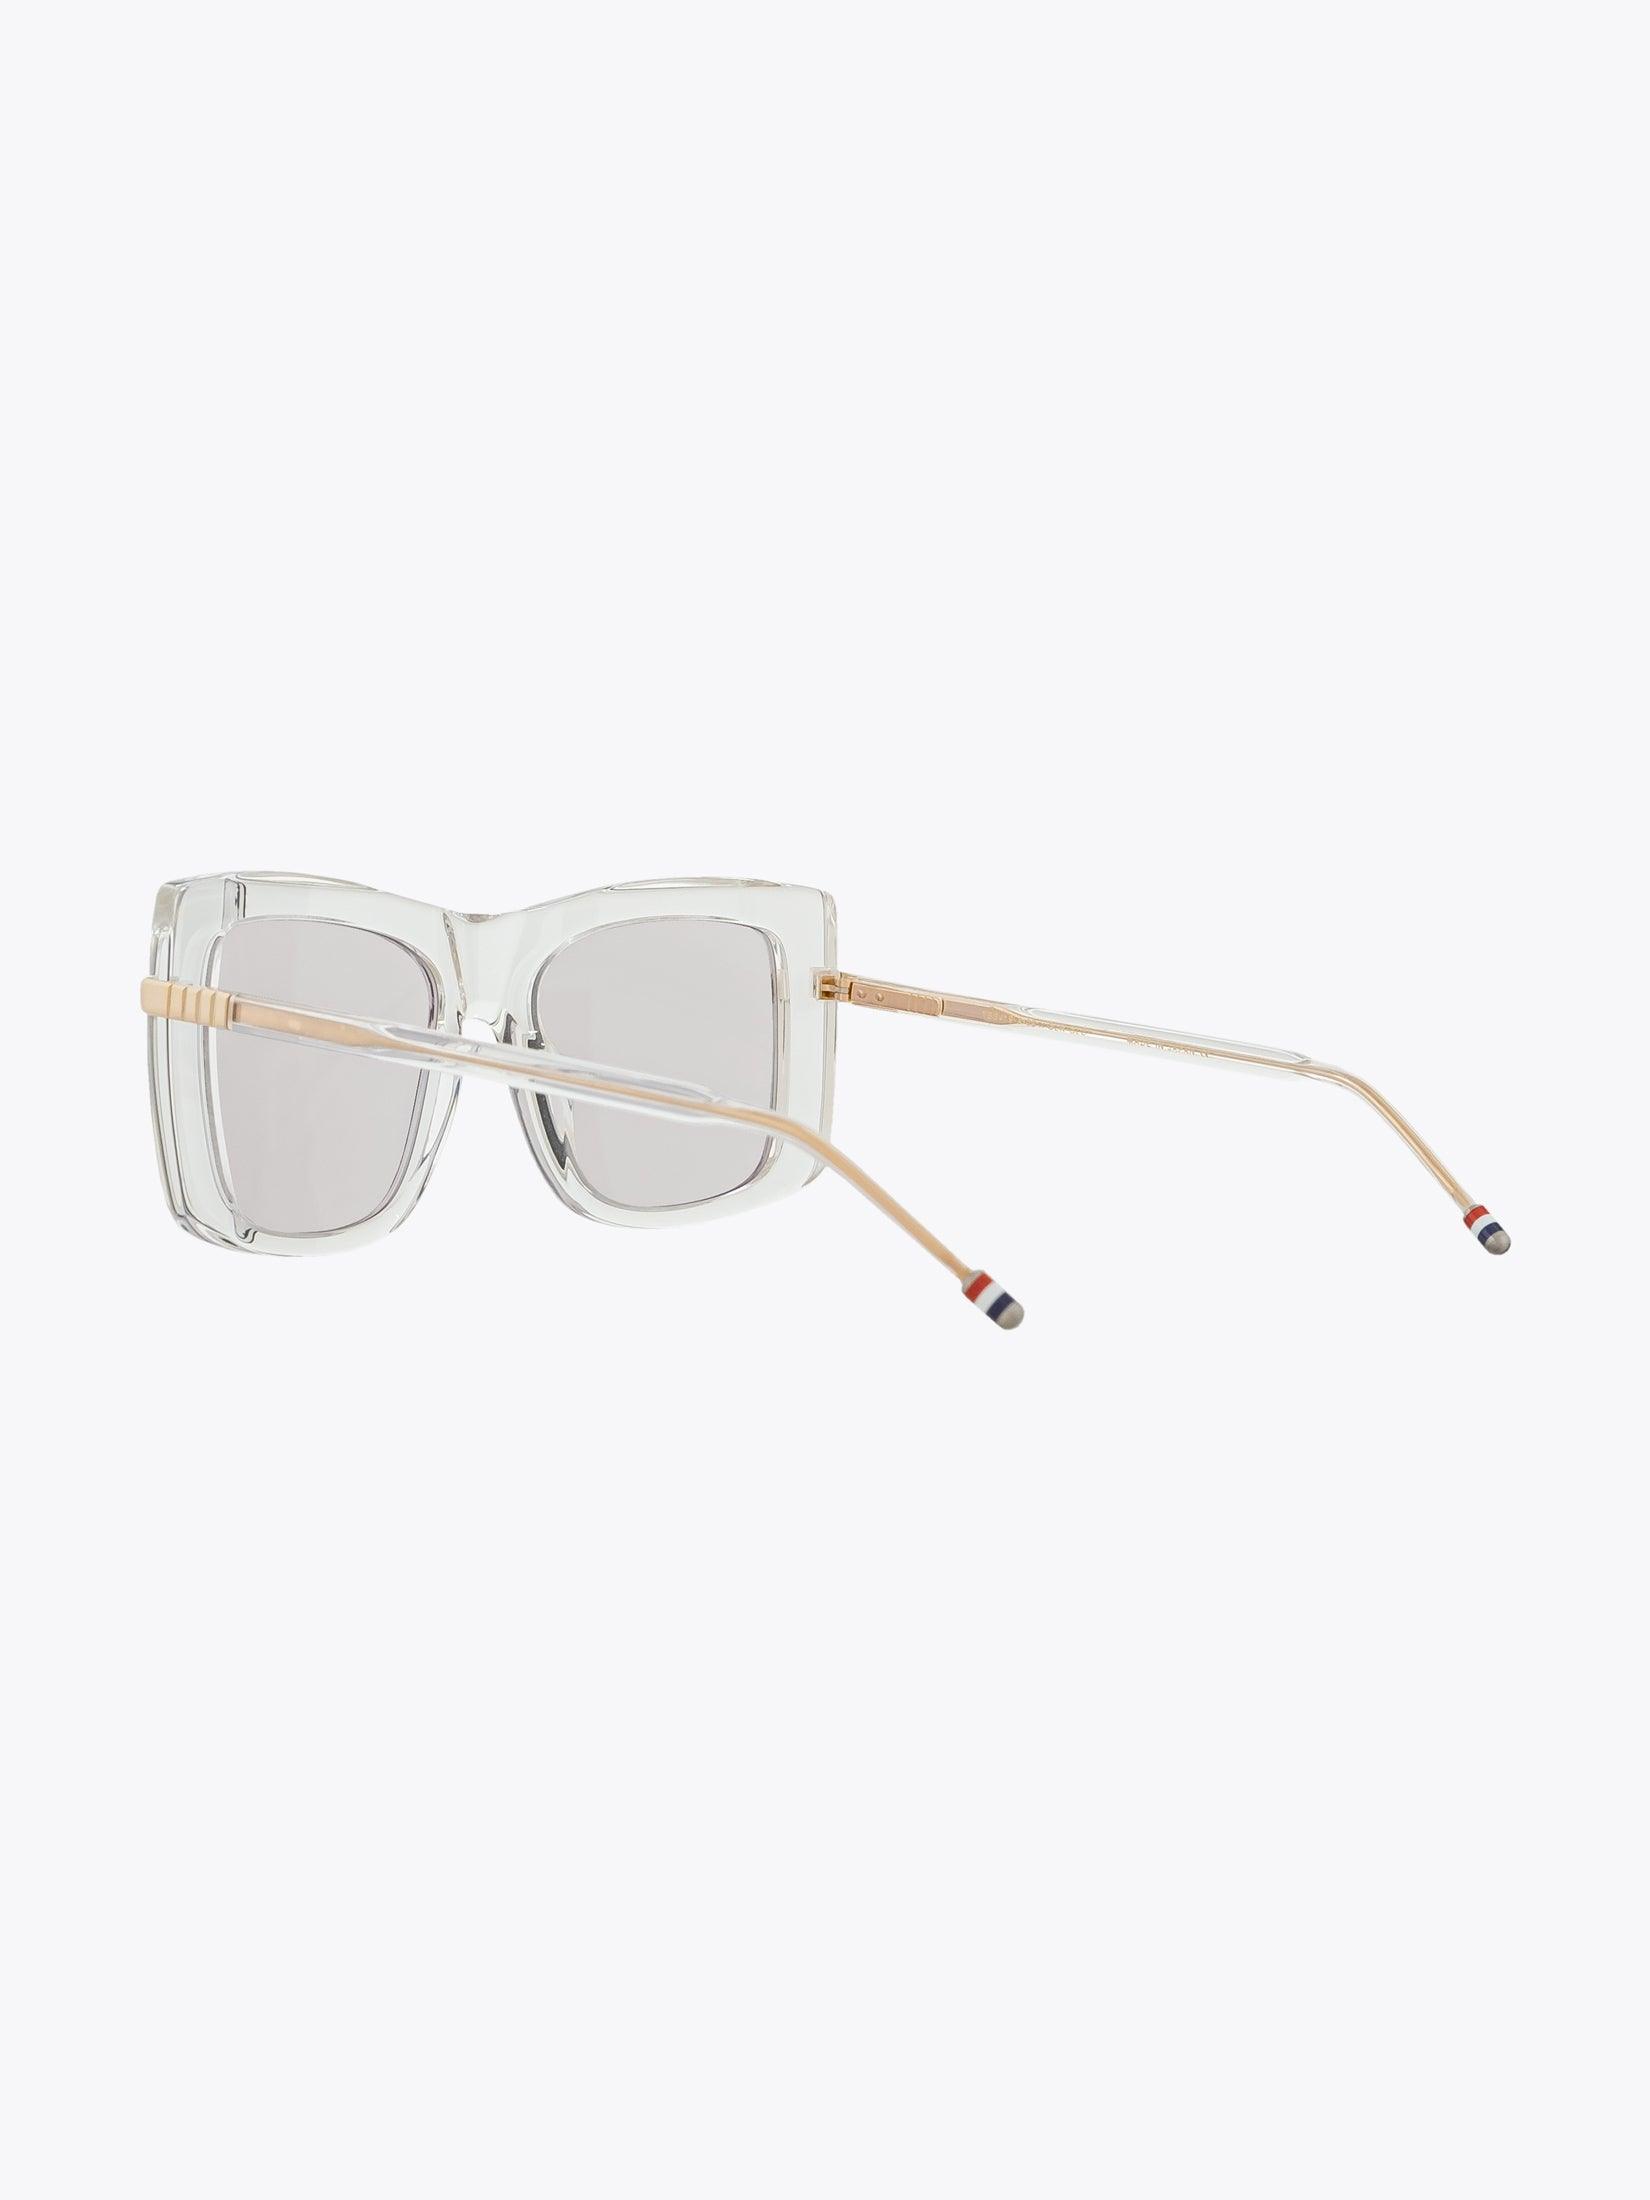 Thom Browne TB-419 Crystal Sunglasses